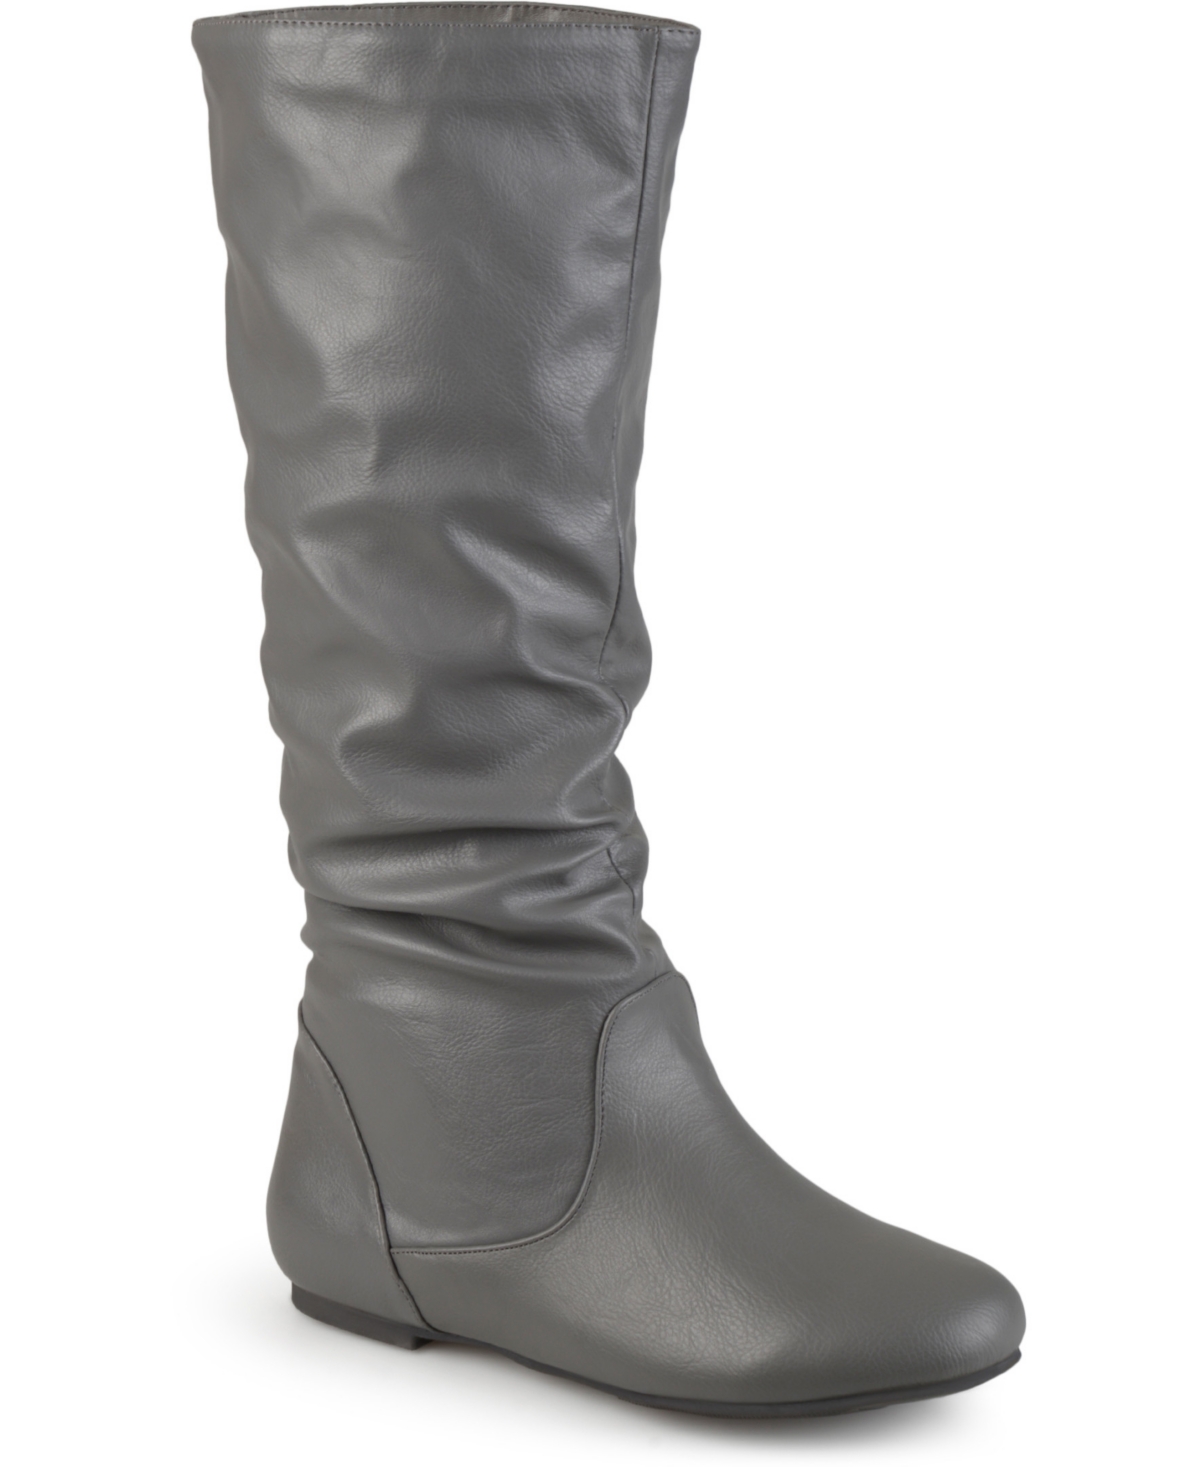 Women's Jayne Knee High Boots - Gray